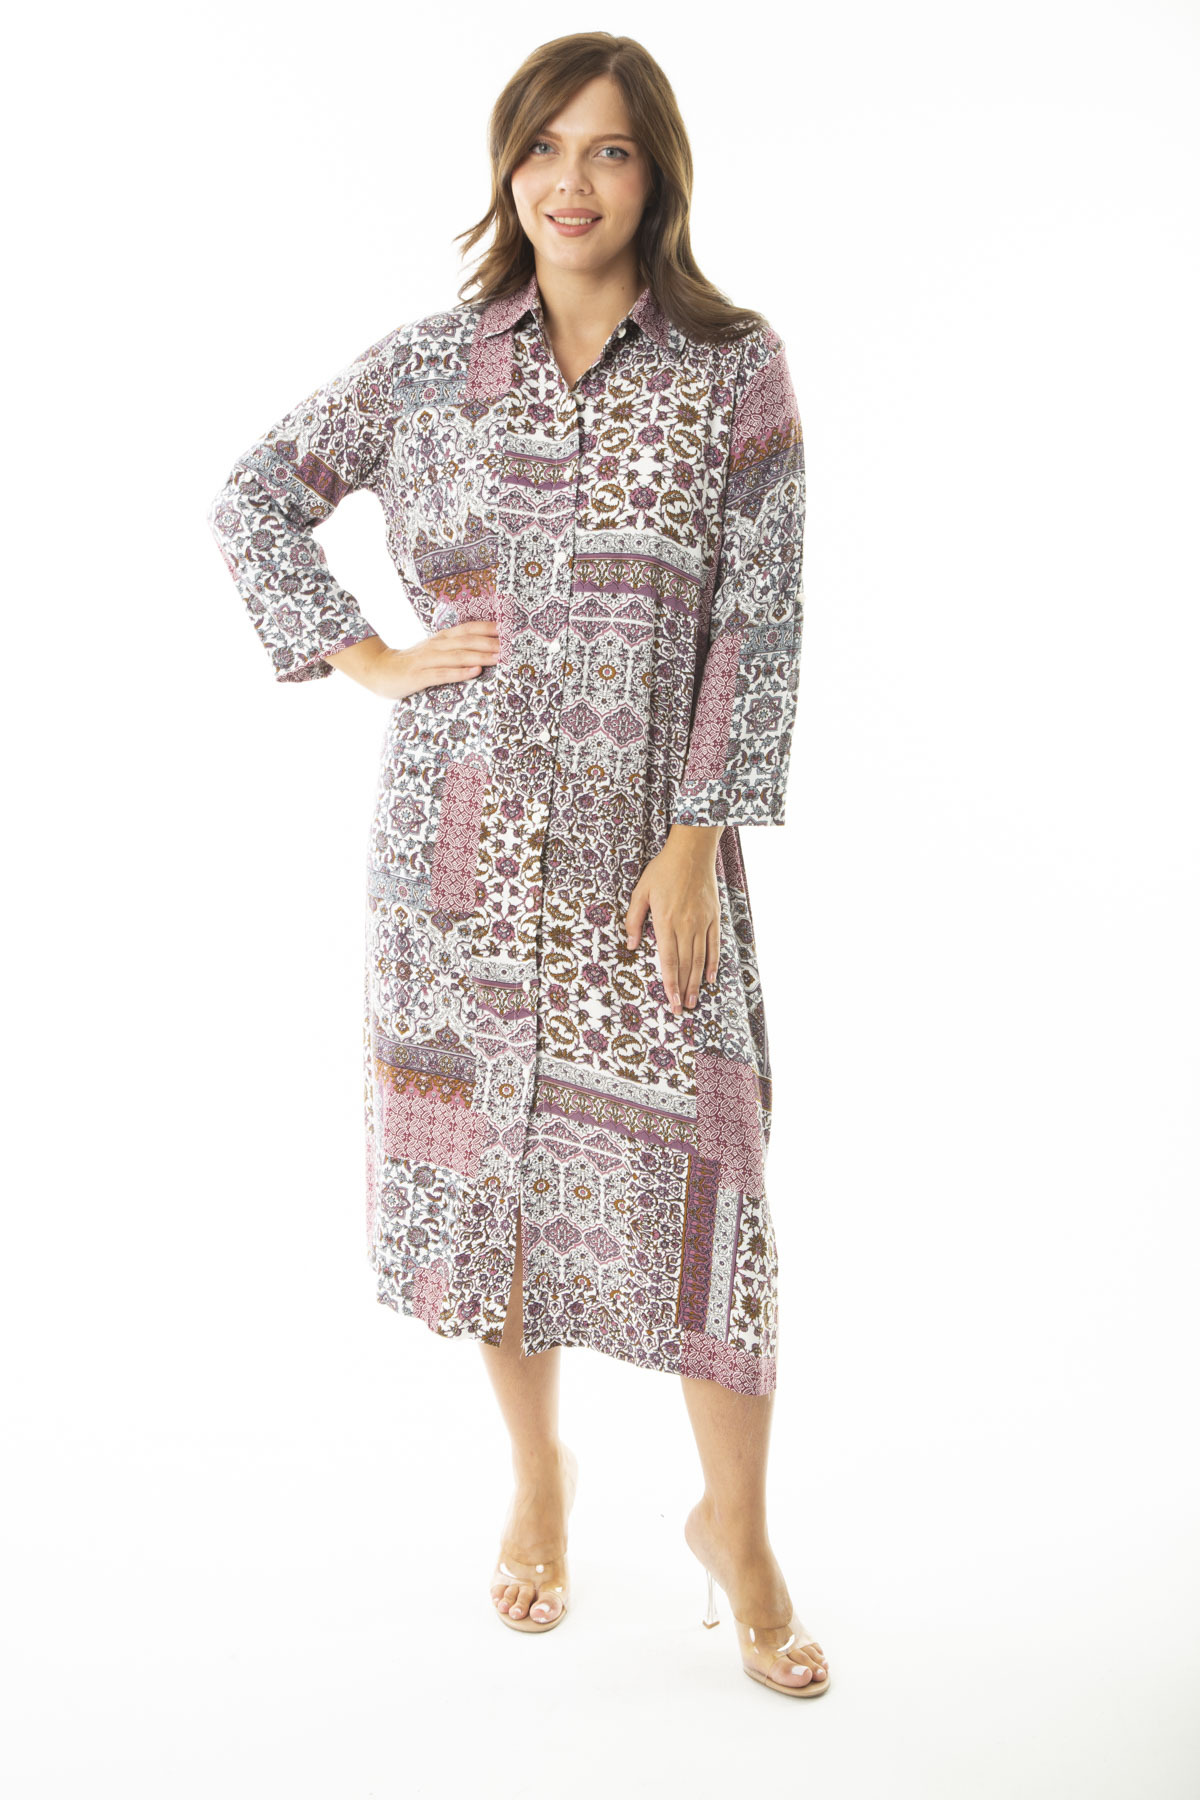 Levně Şans Women's Plus Size Plum Woven Viscose Fabric Long Dress with Buttons at the Front